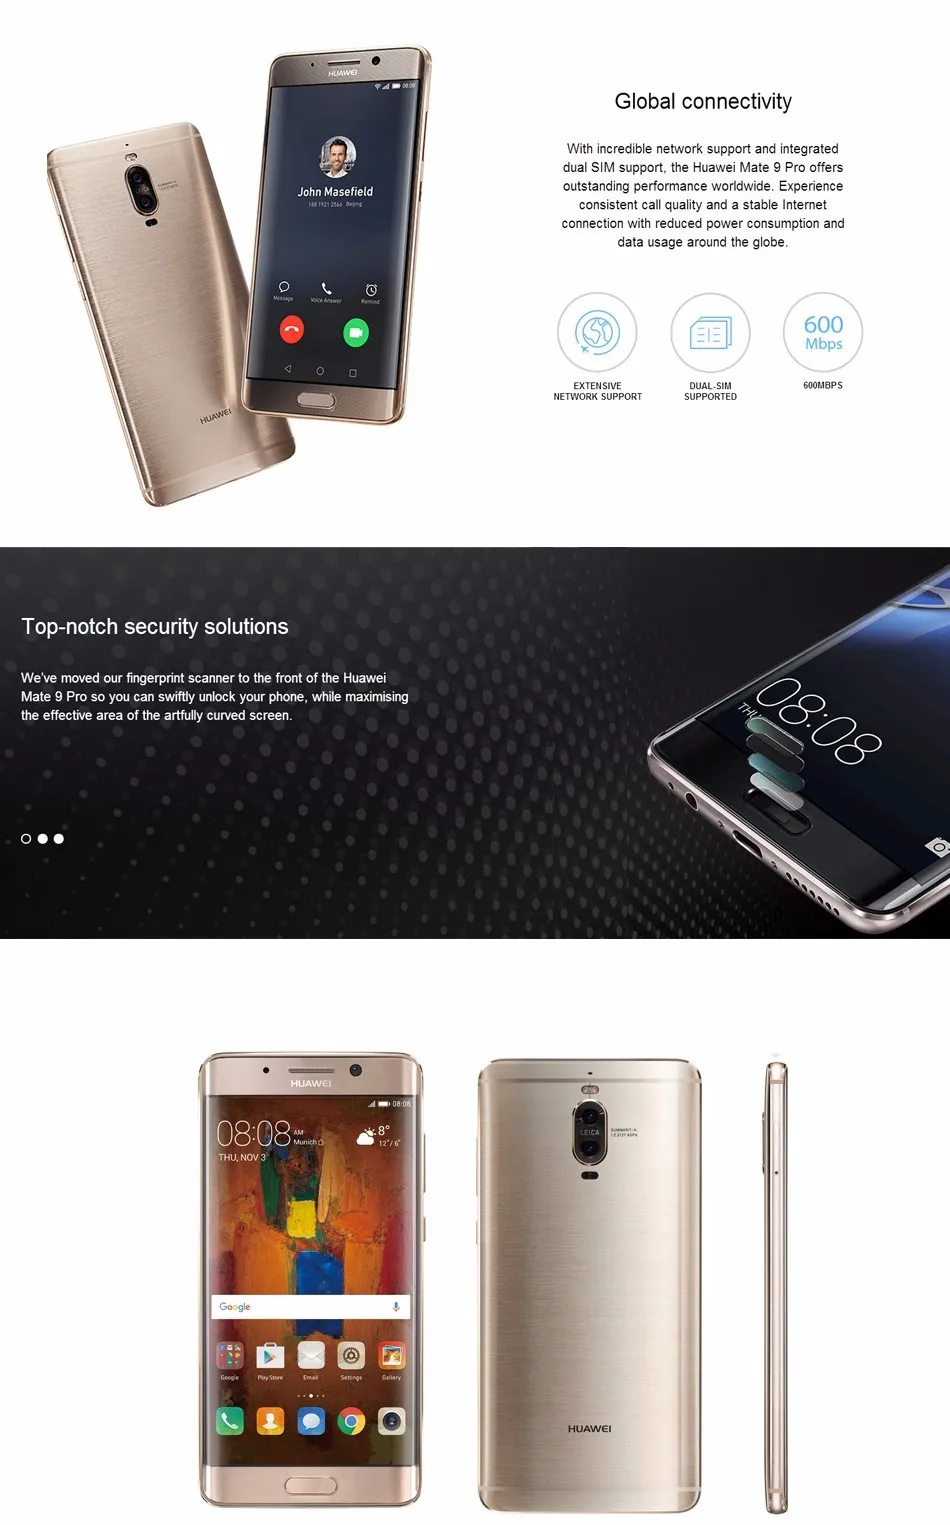 Original HuaWei Mate 9 Pro 4G LTE Smart Phone 20.0MP Kirin 960 Octa Core 5.5" Screen 2560x1440 Android 7.0 Fingerprint Dual Sim huawei cellphone model